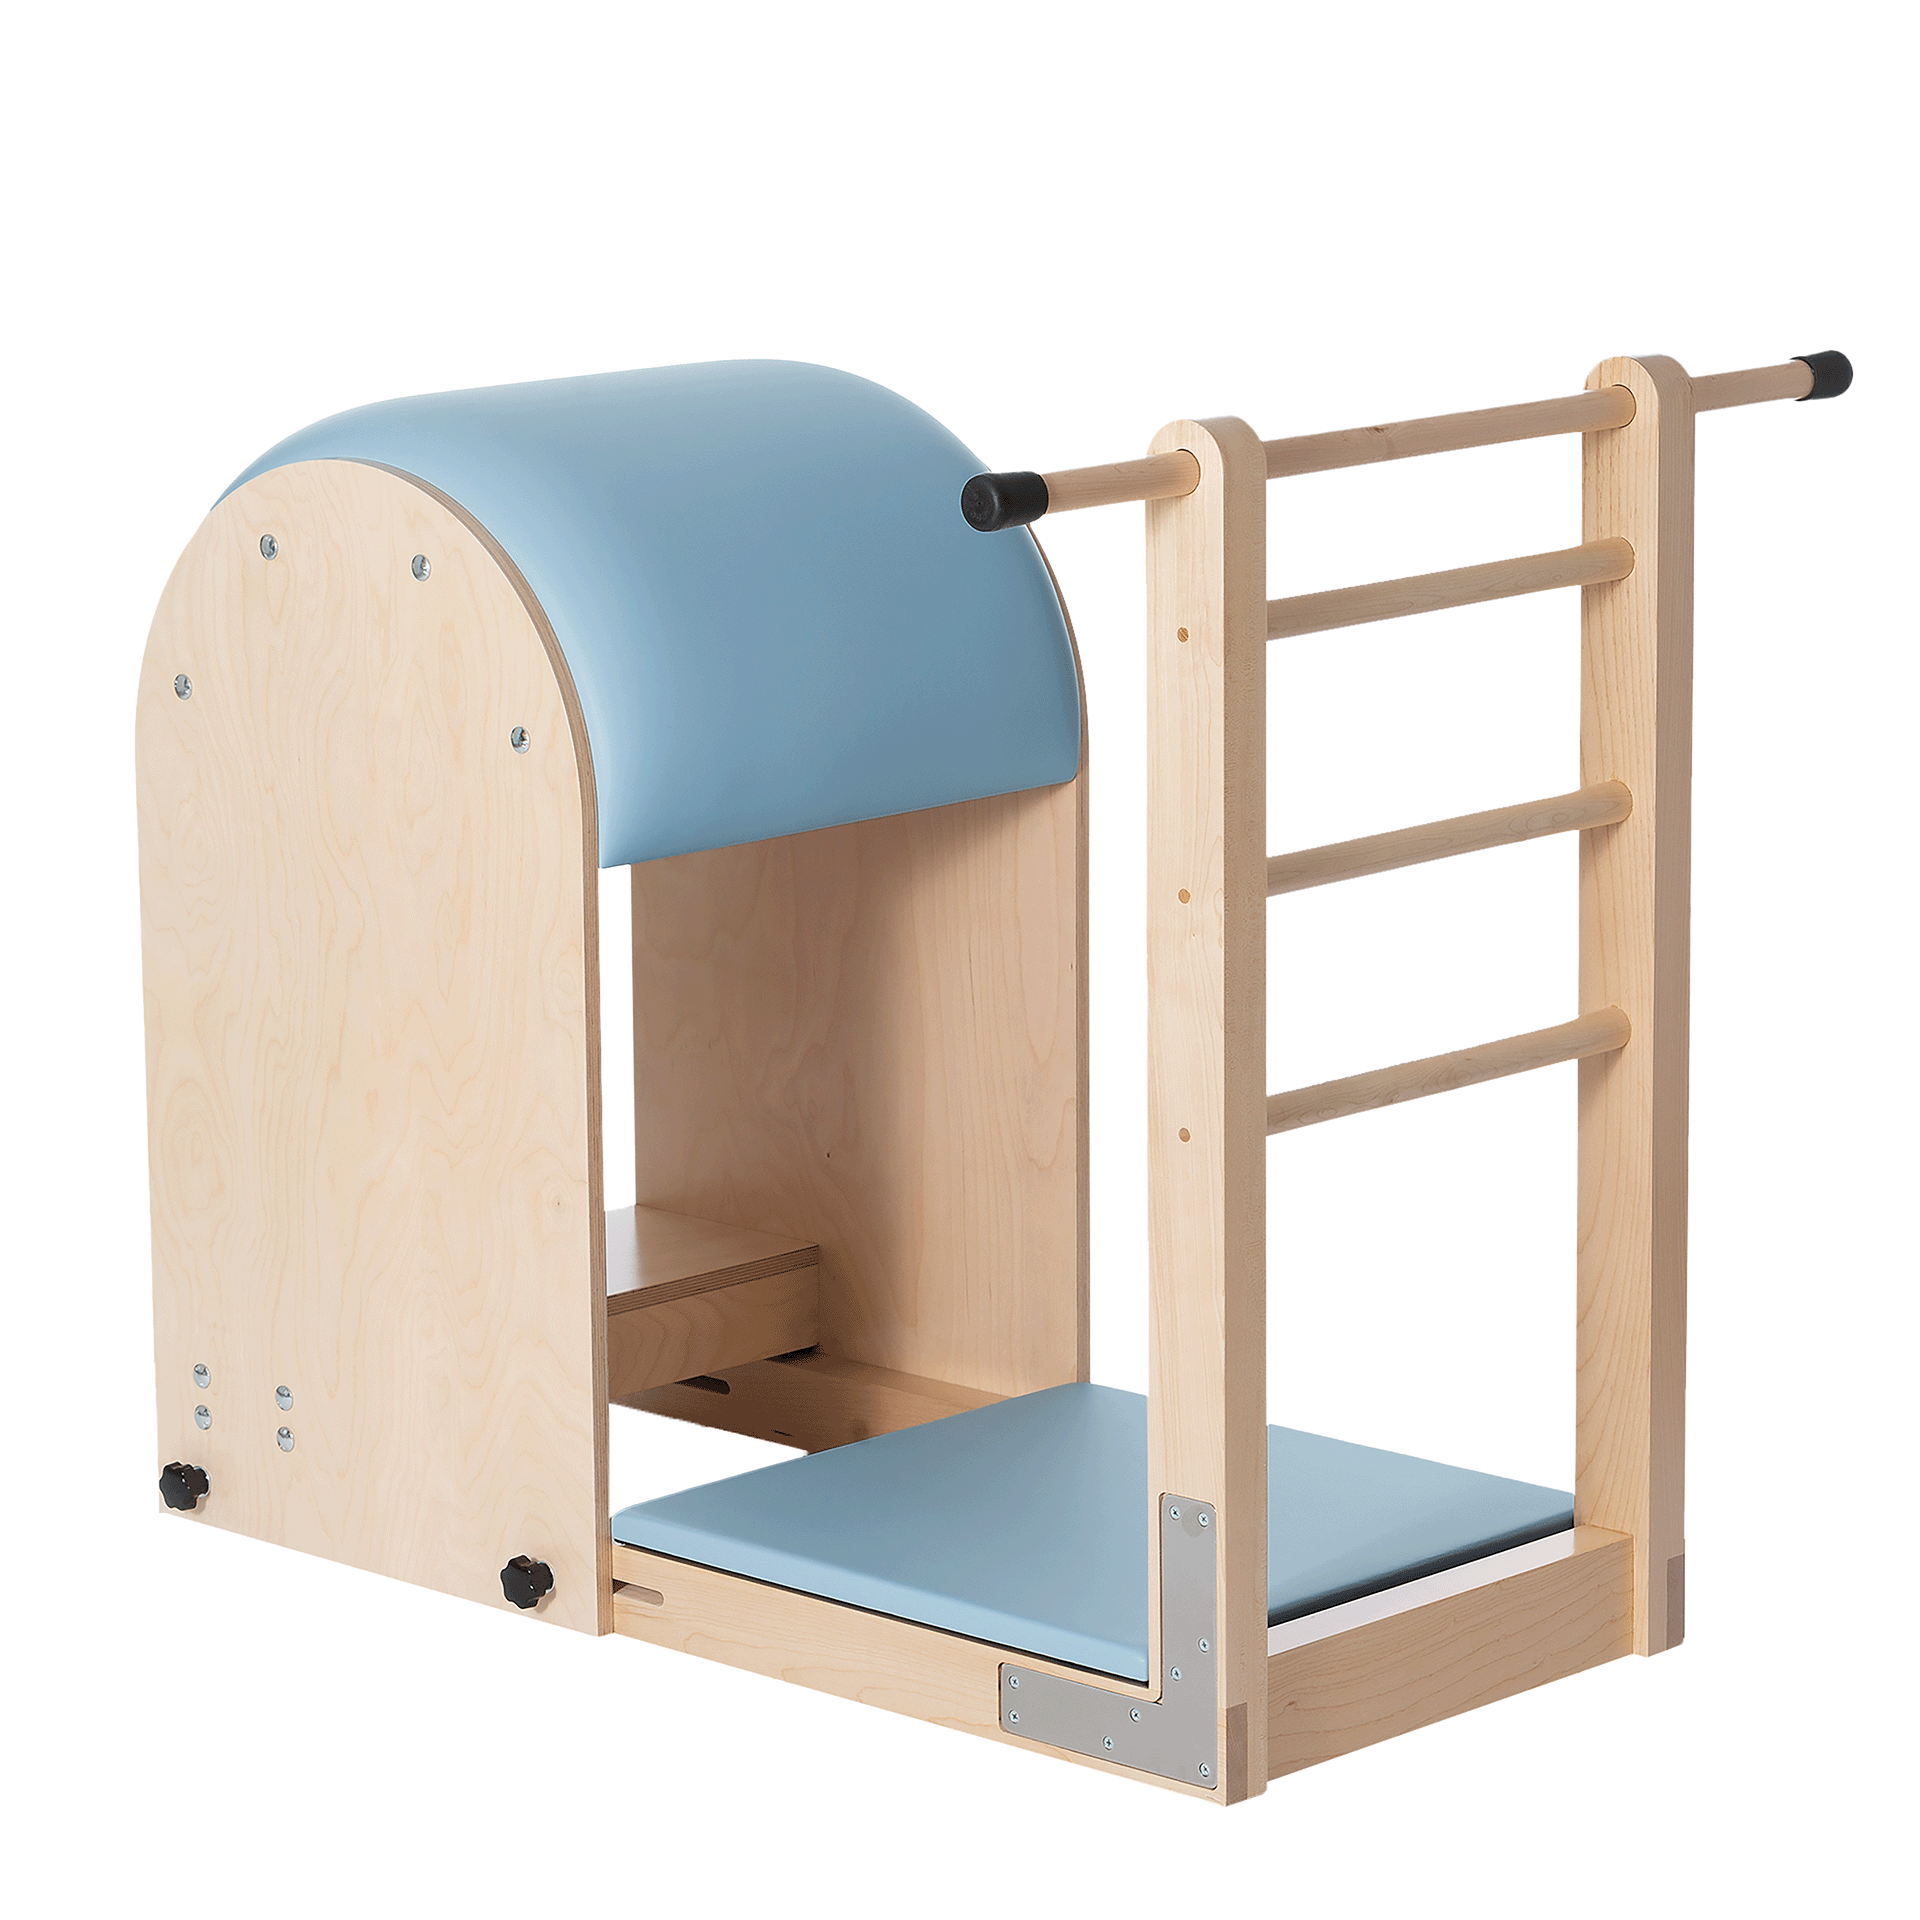 Ladder Barrels For Pilates – PILATES-ONEMAX